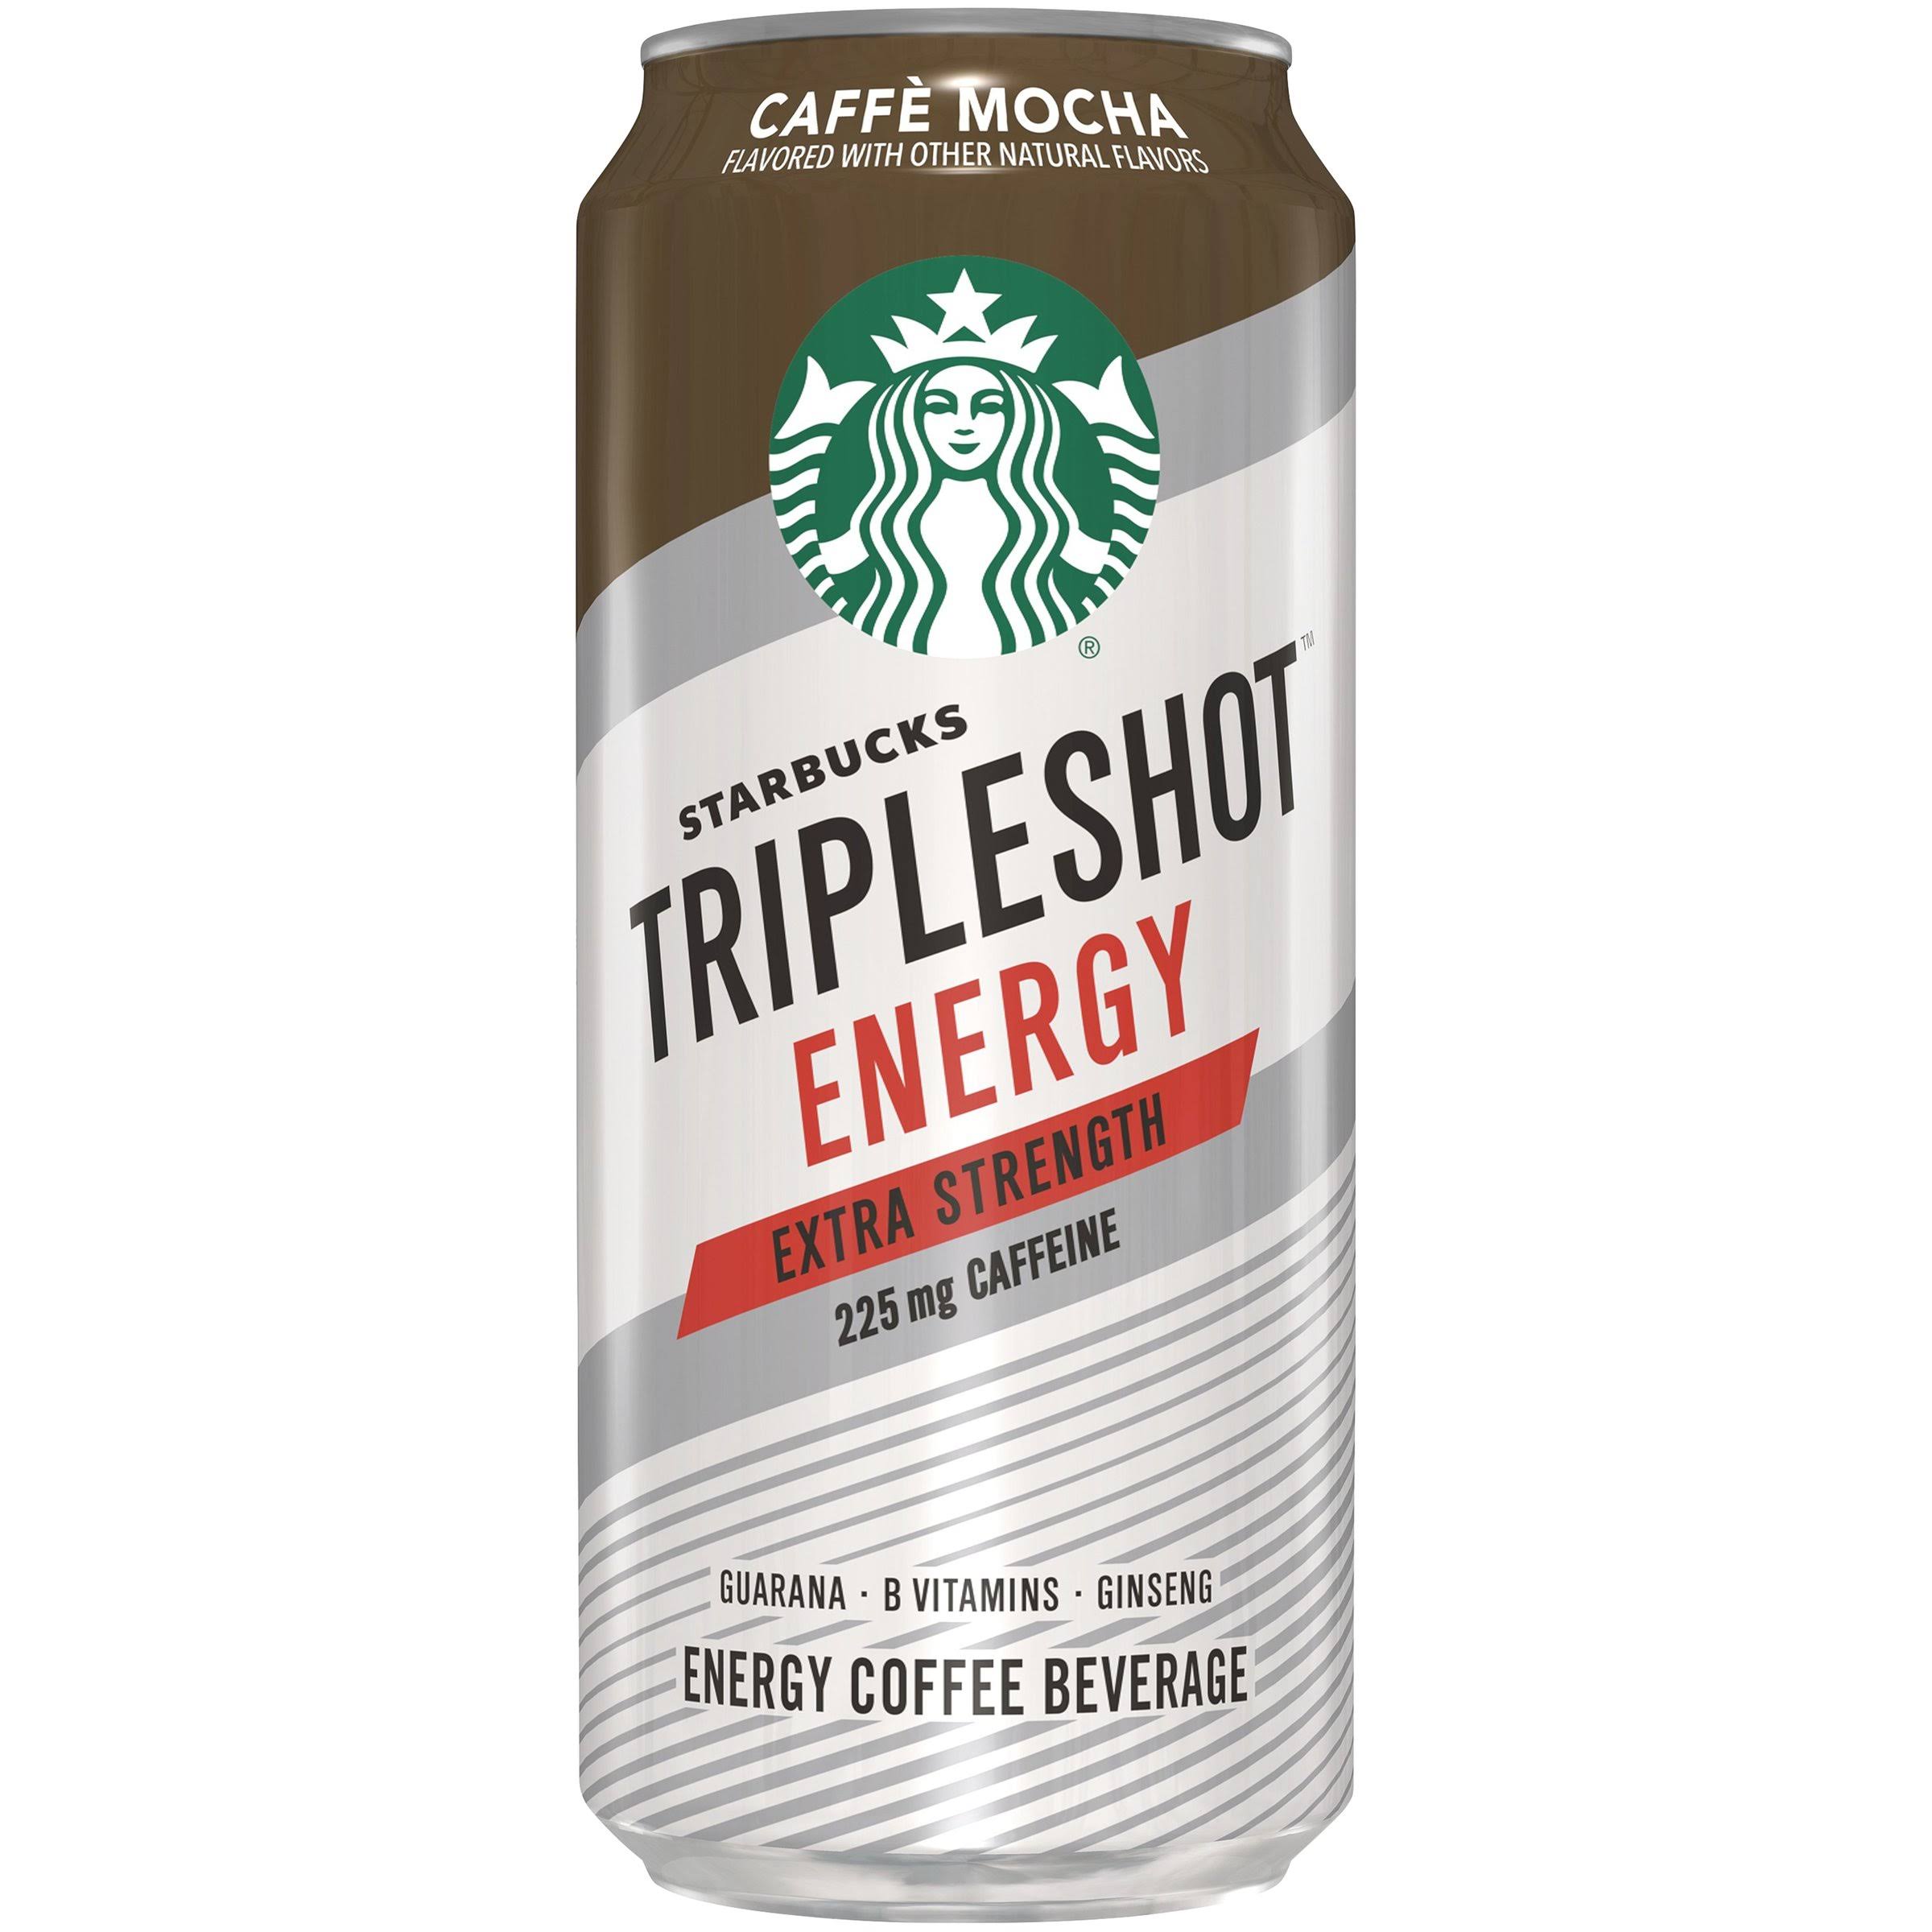 Starbucks Tripleshot Energy Extra Strength Energy Coffee Beverage - Caffe Mocha, 15oz